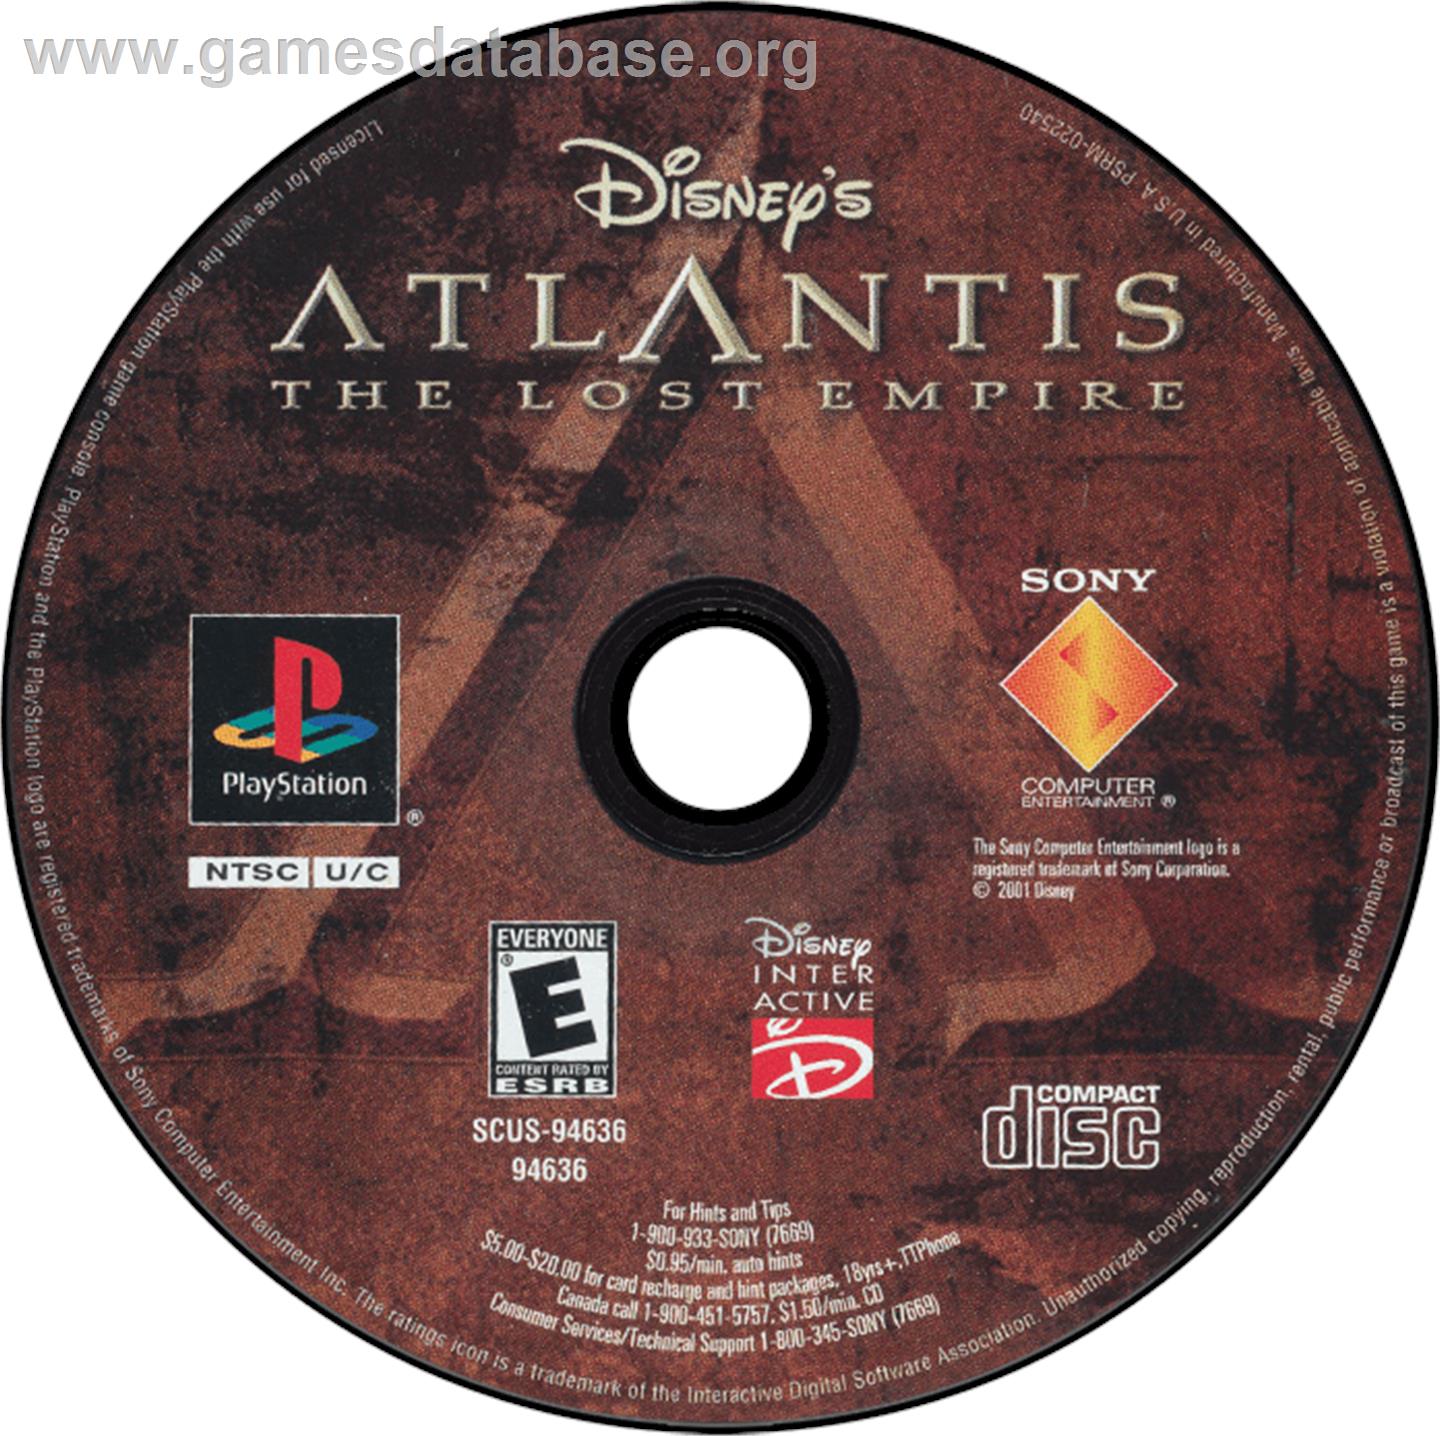 Disney's Atlantis: The Lost Empire - Sony Playstation - Artwork - Disc